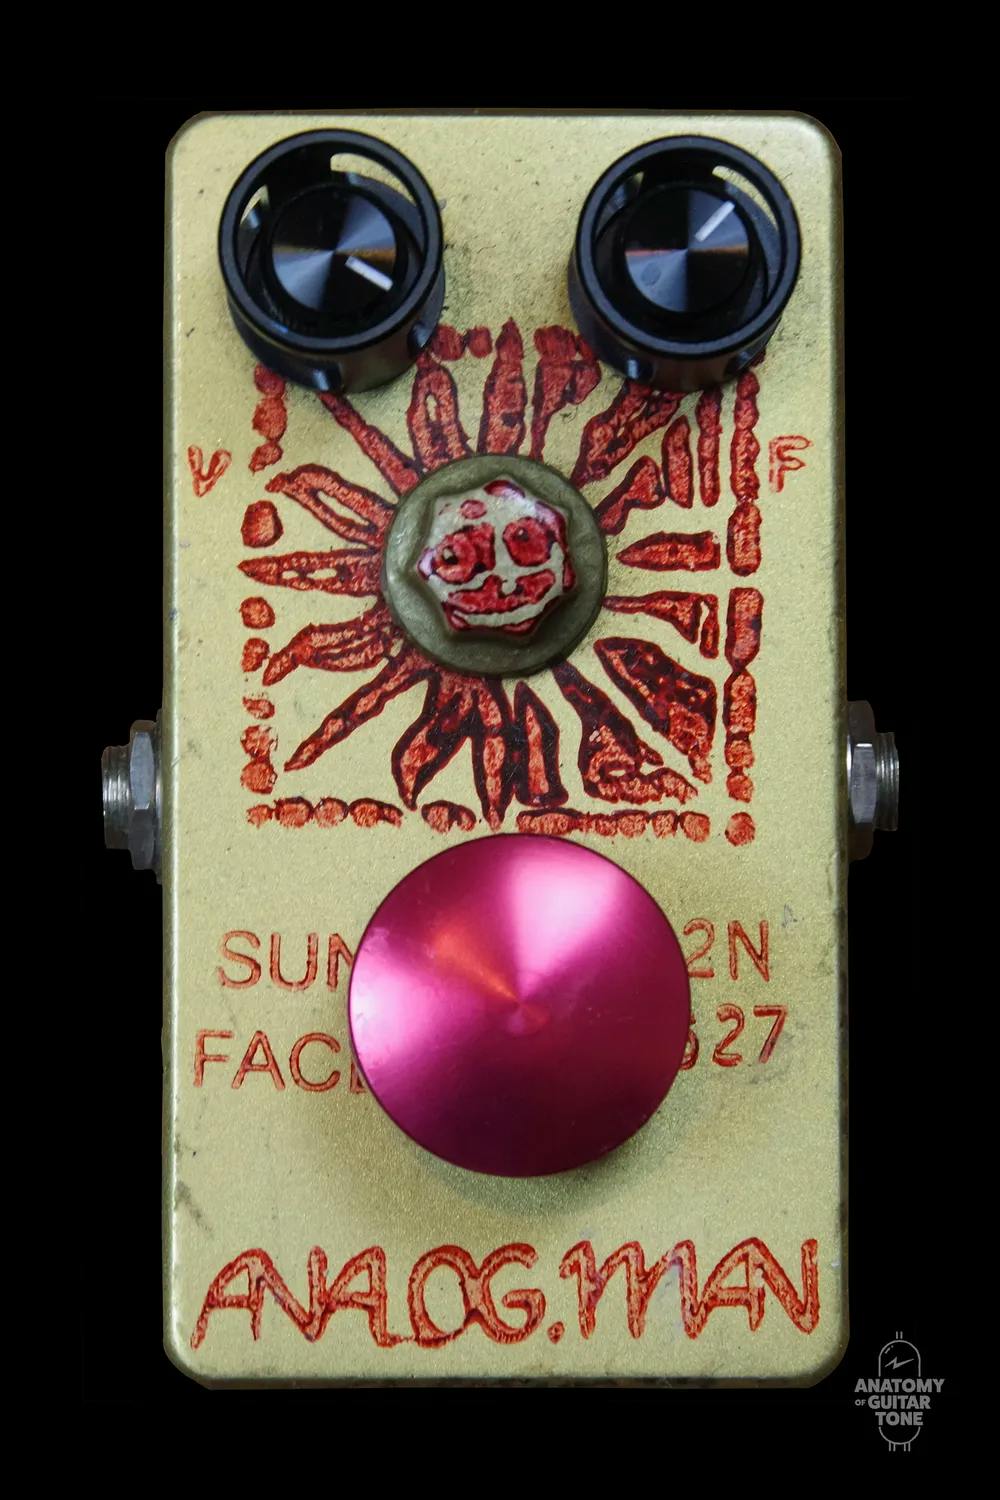 Sun Face Guitar Pedal By Analog Man